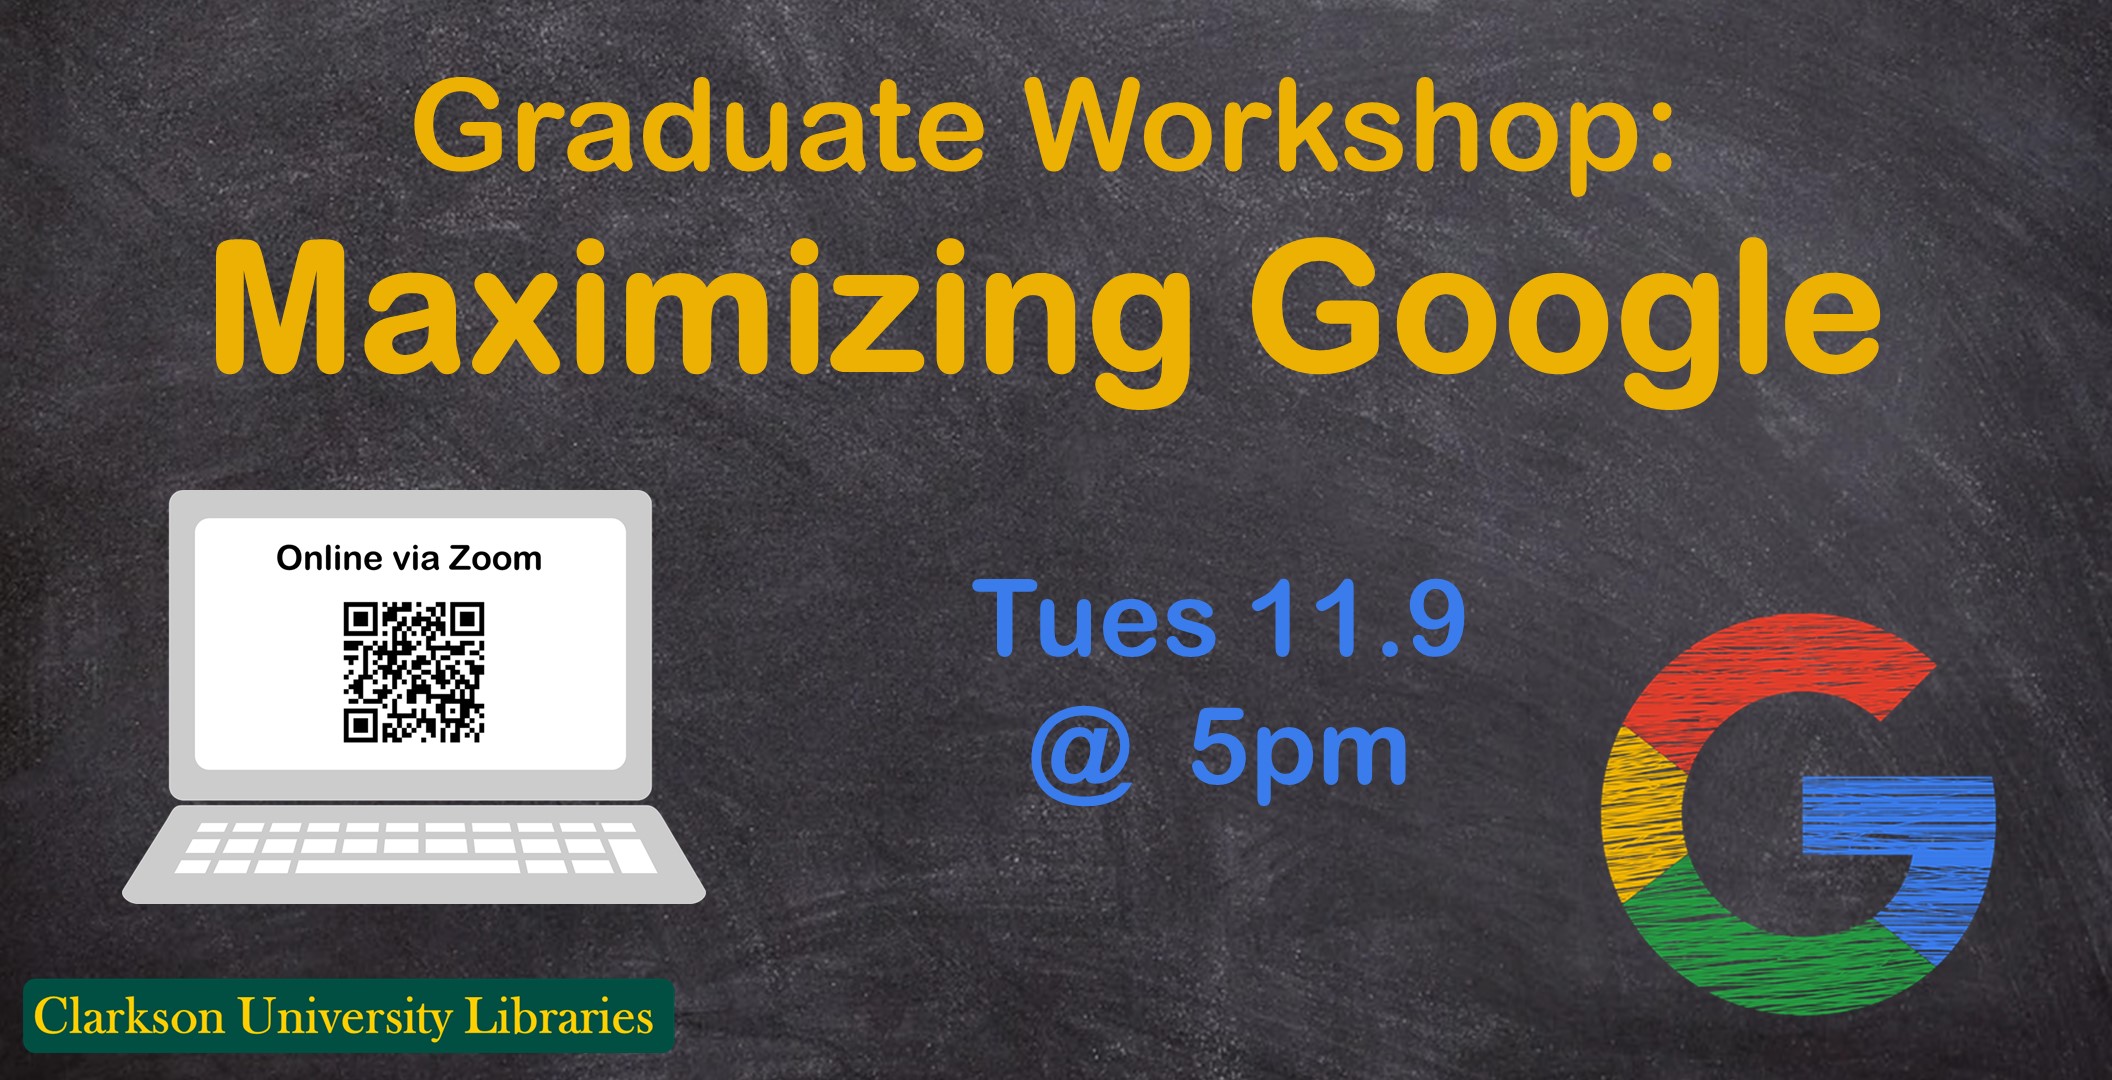 Graduate Workshop TODAY: Maximizing Google